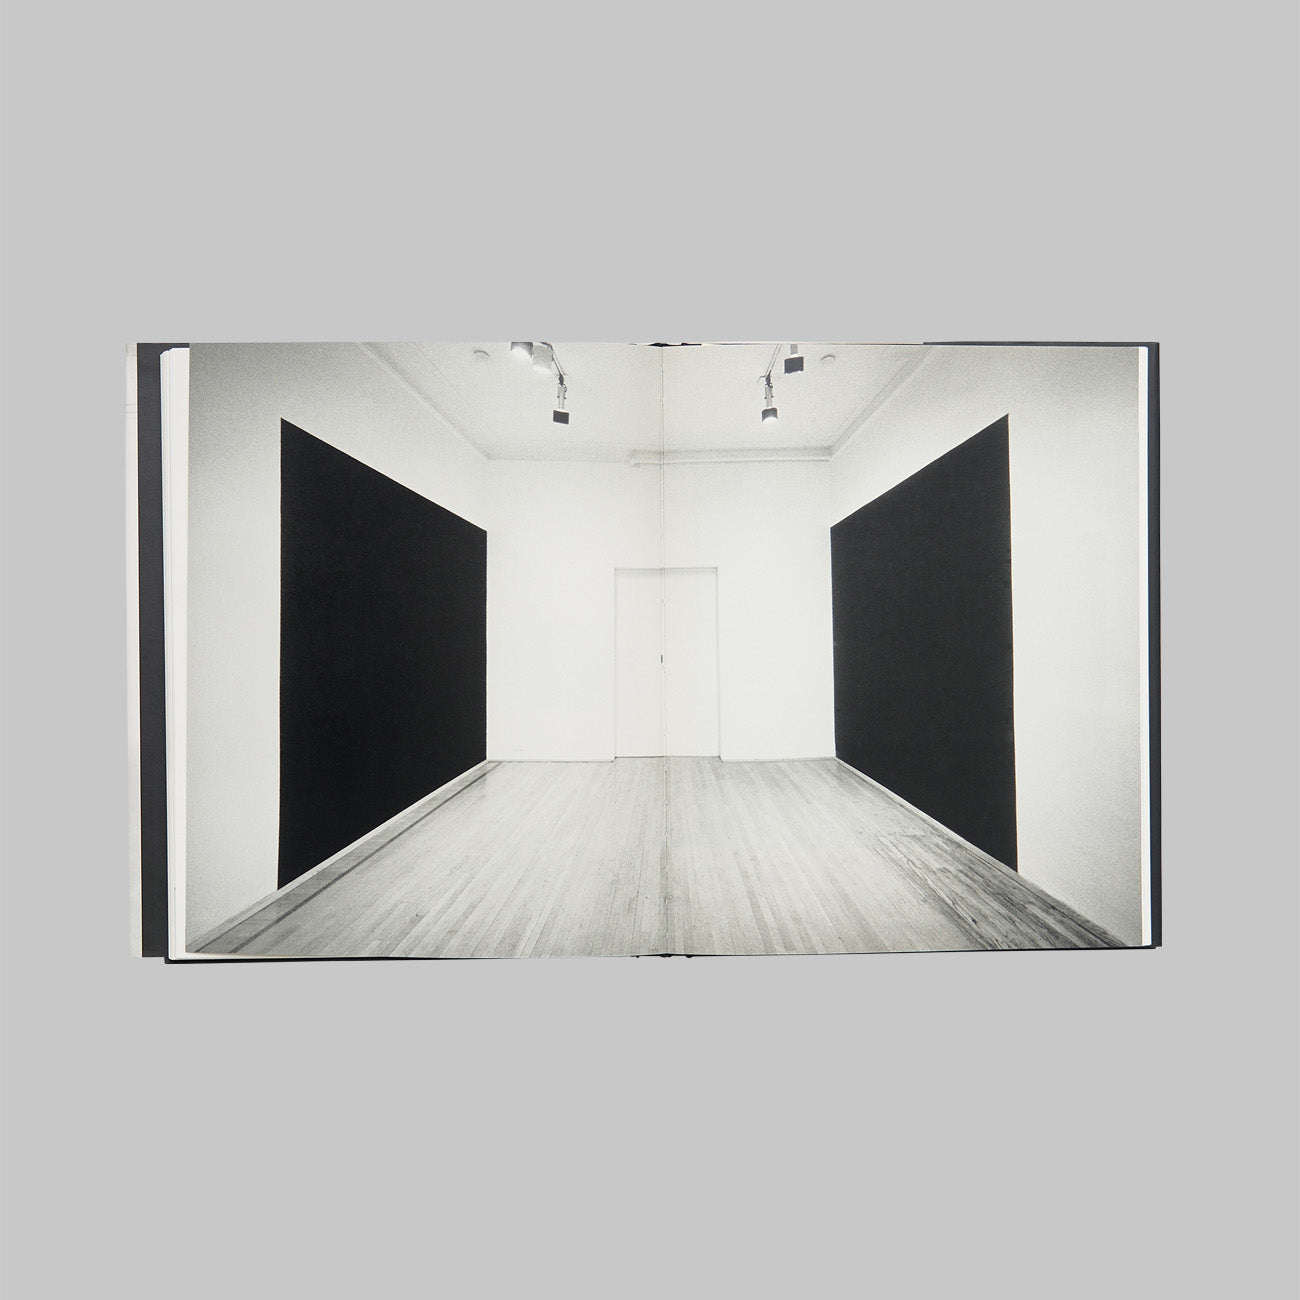 RICHARD SERRA DRAWING: A RETROSPECTIVE / Richard Serra